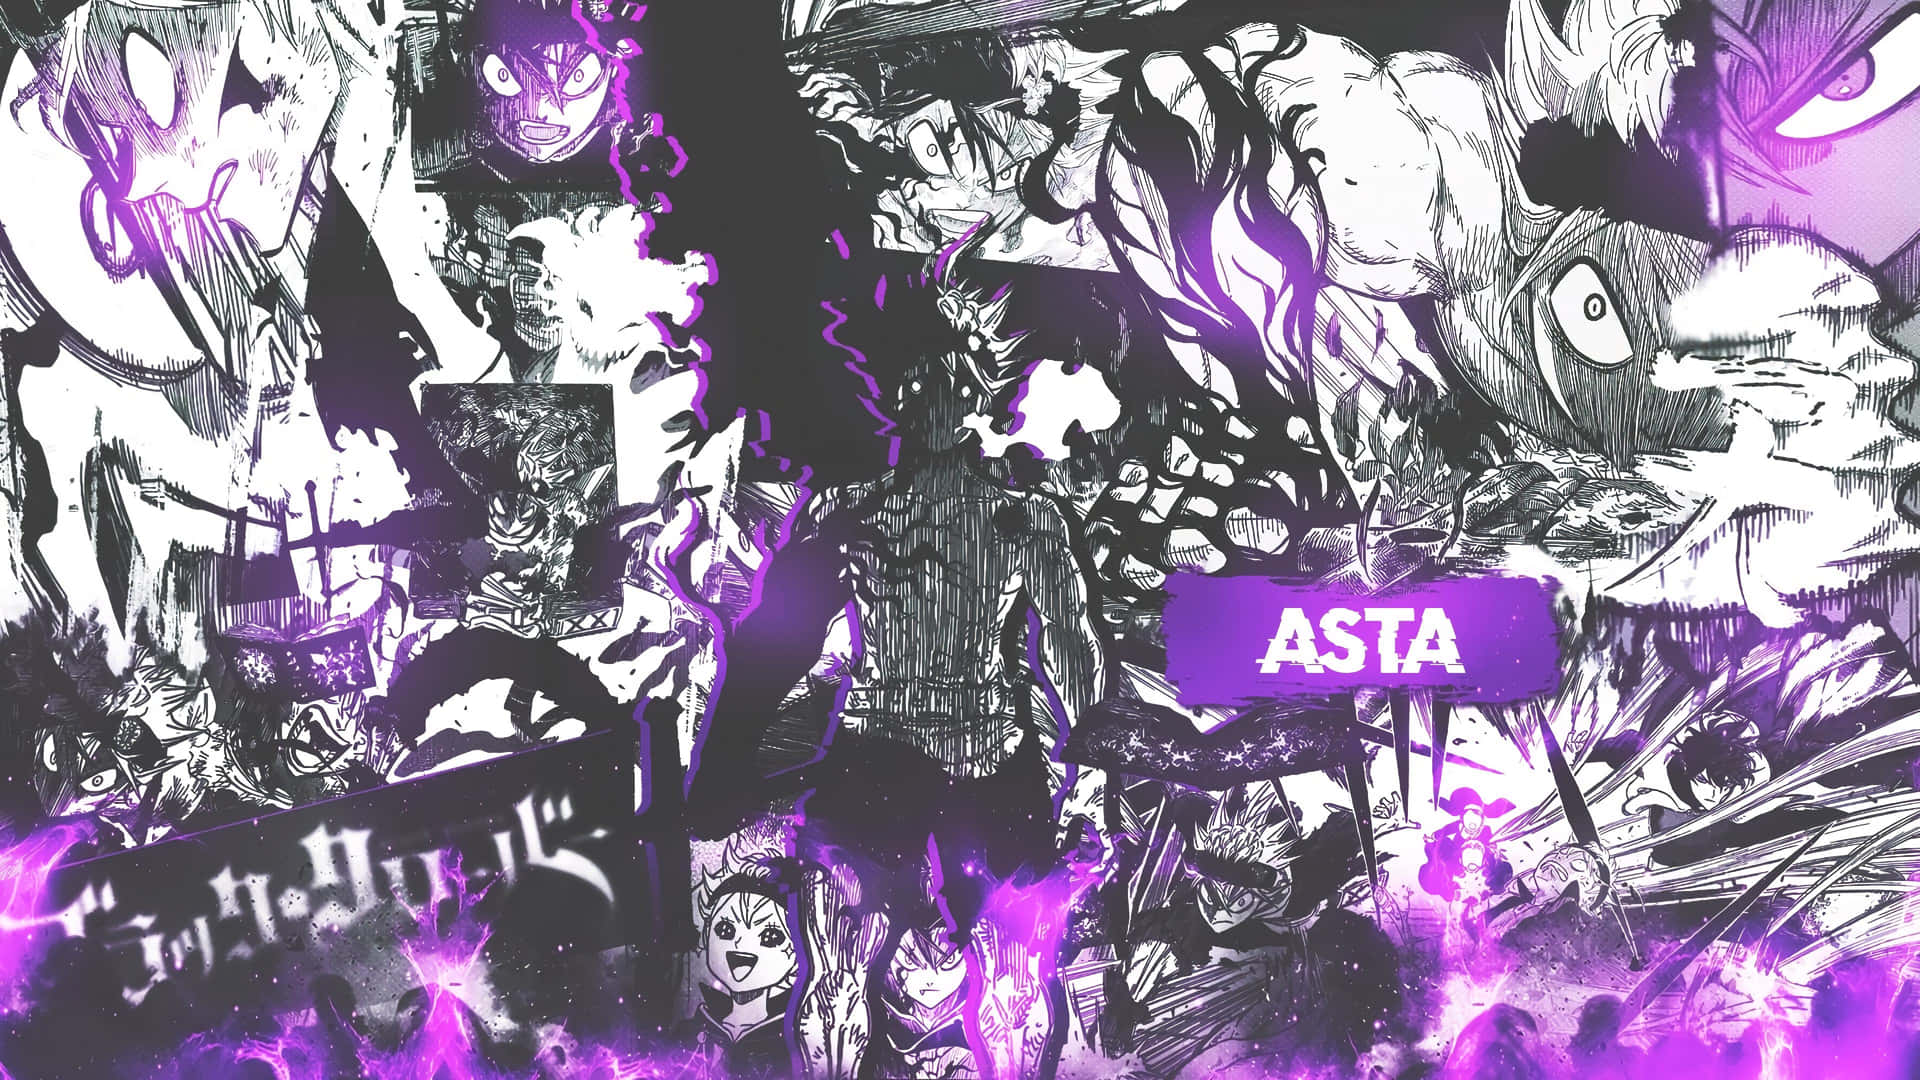 Asta Black Clover Manga Collage Wallpaper